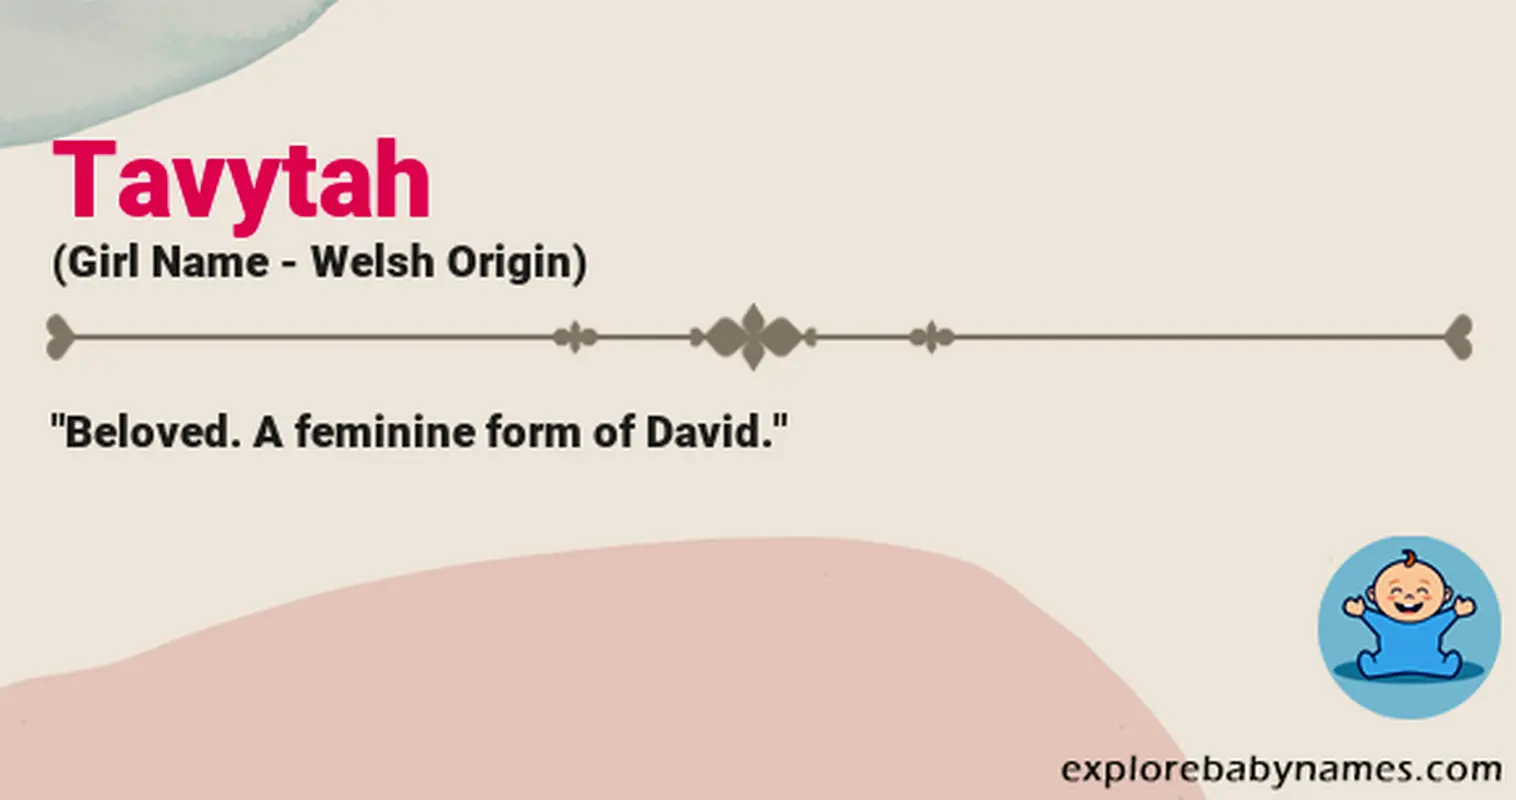 Meaning of Tavytah